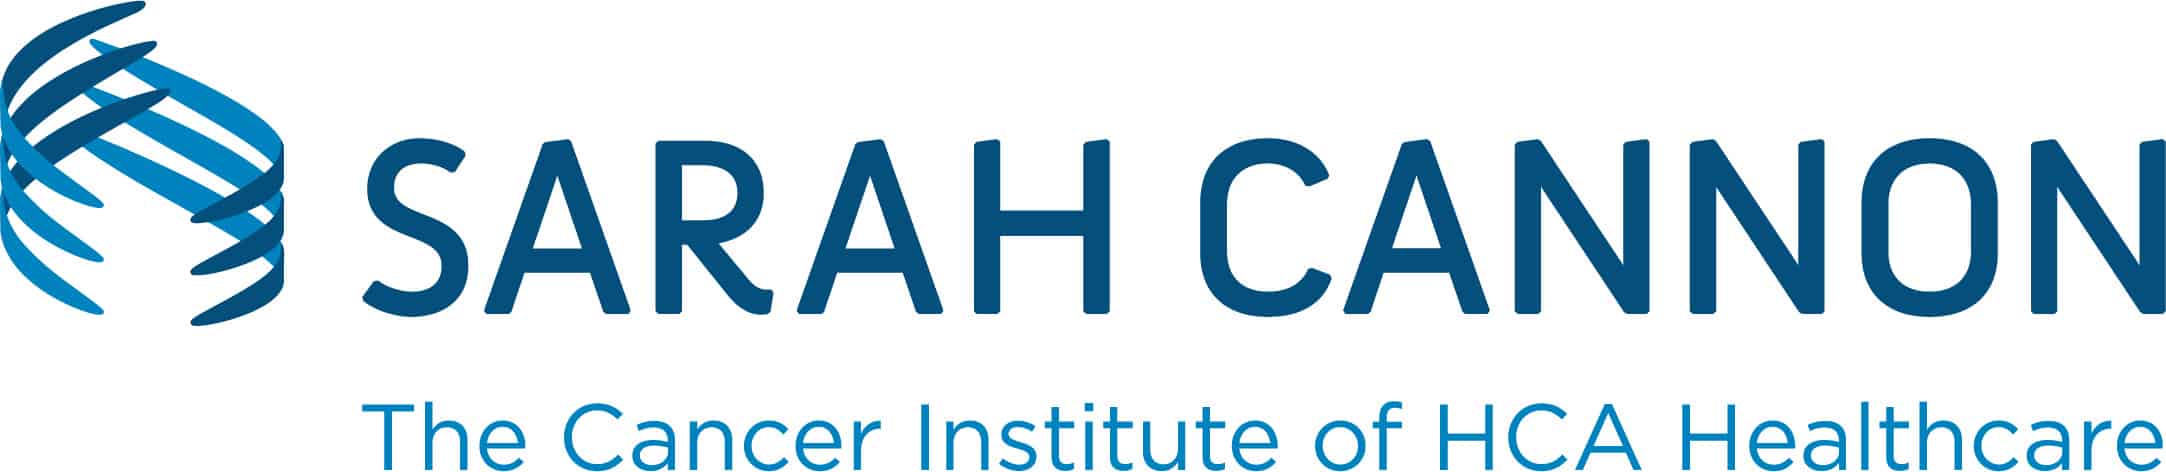 Sarah Cannon Cancer Institute HCA